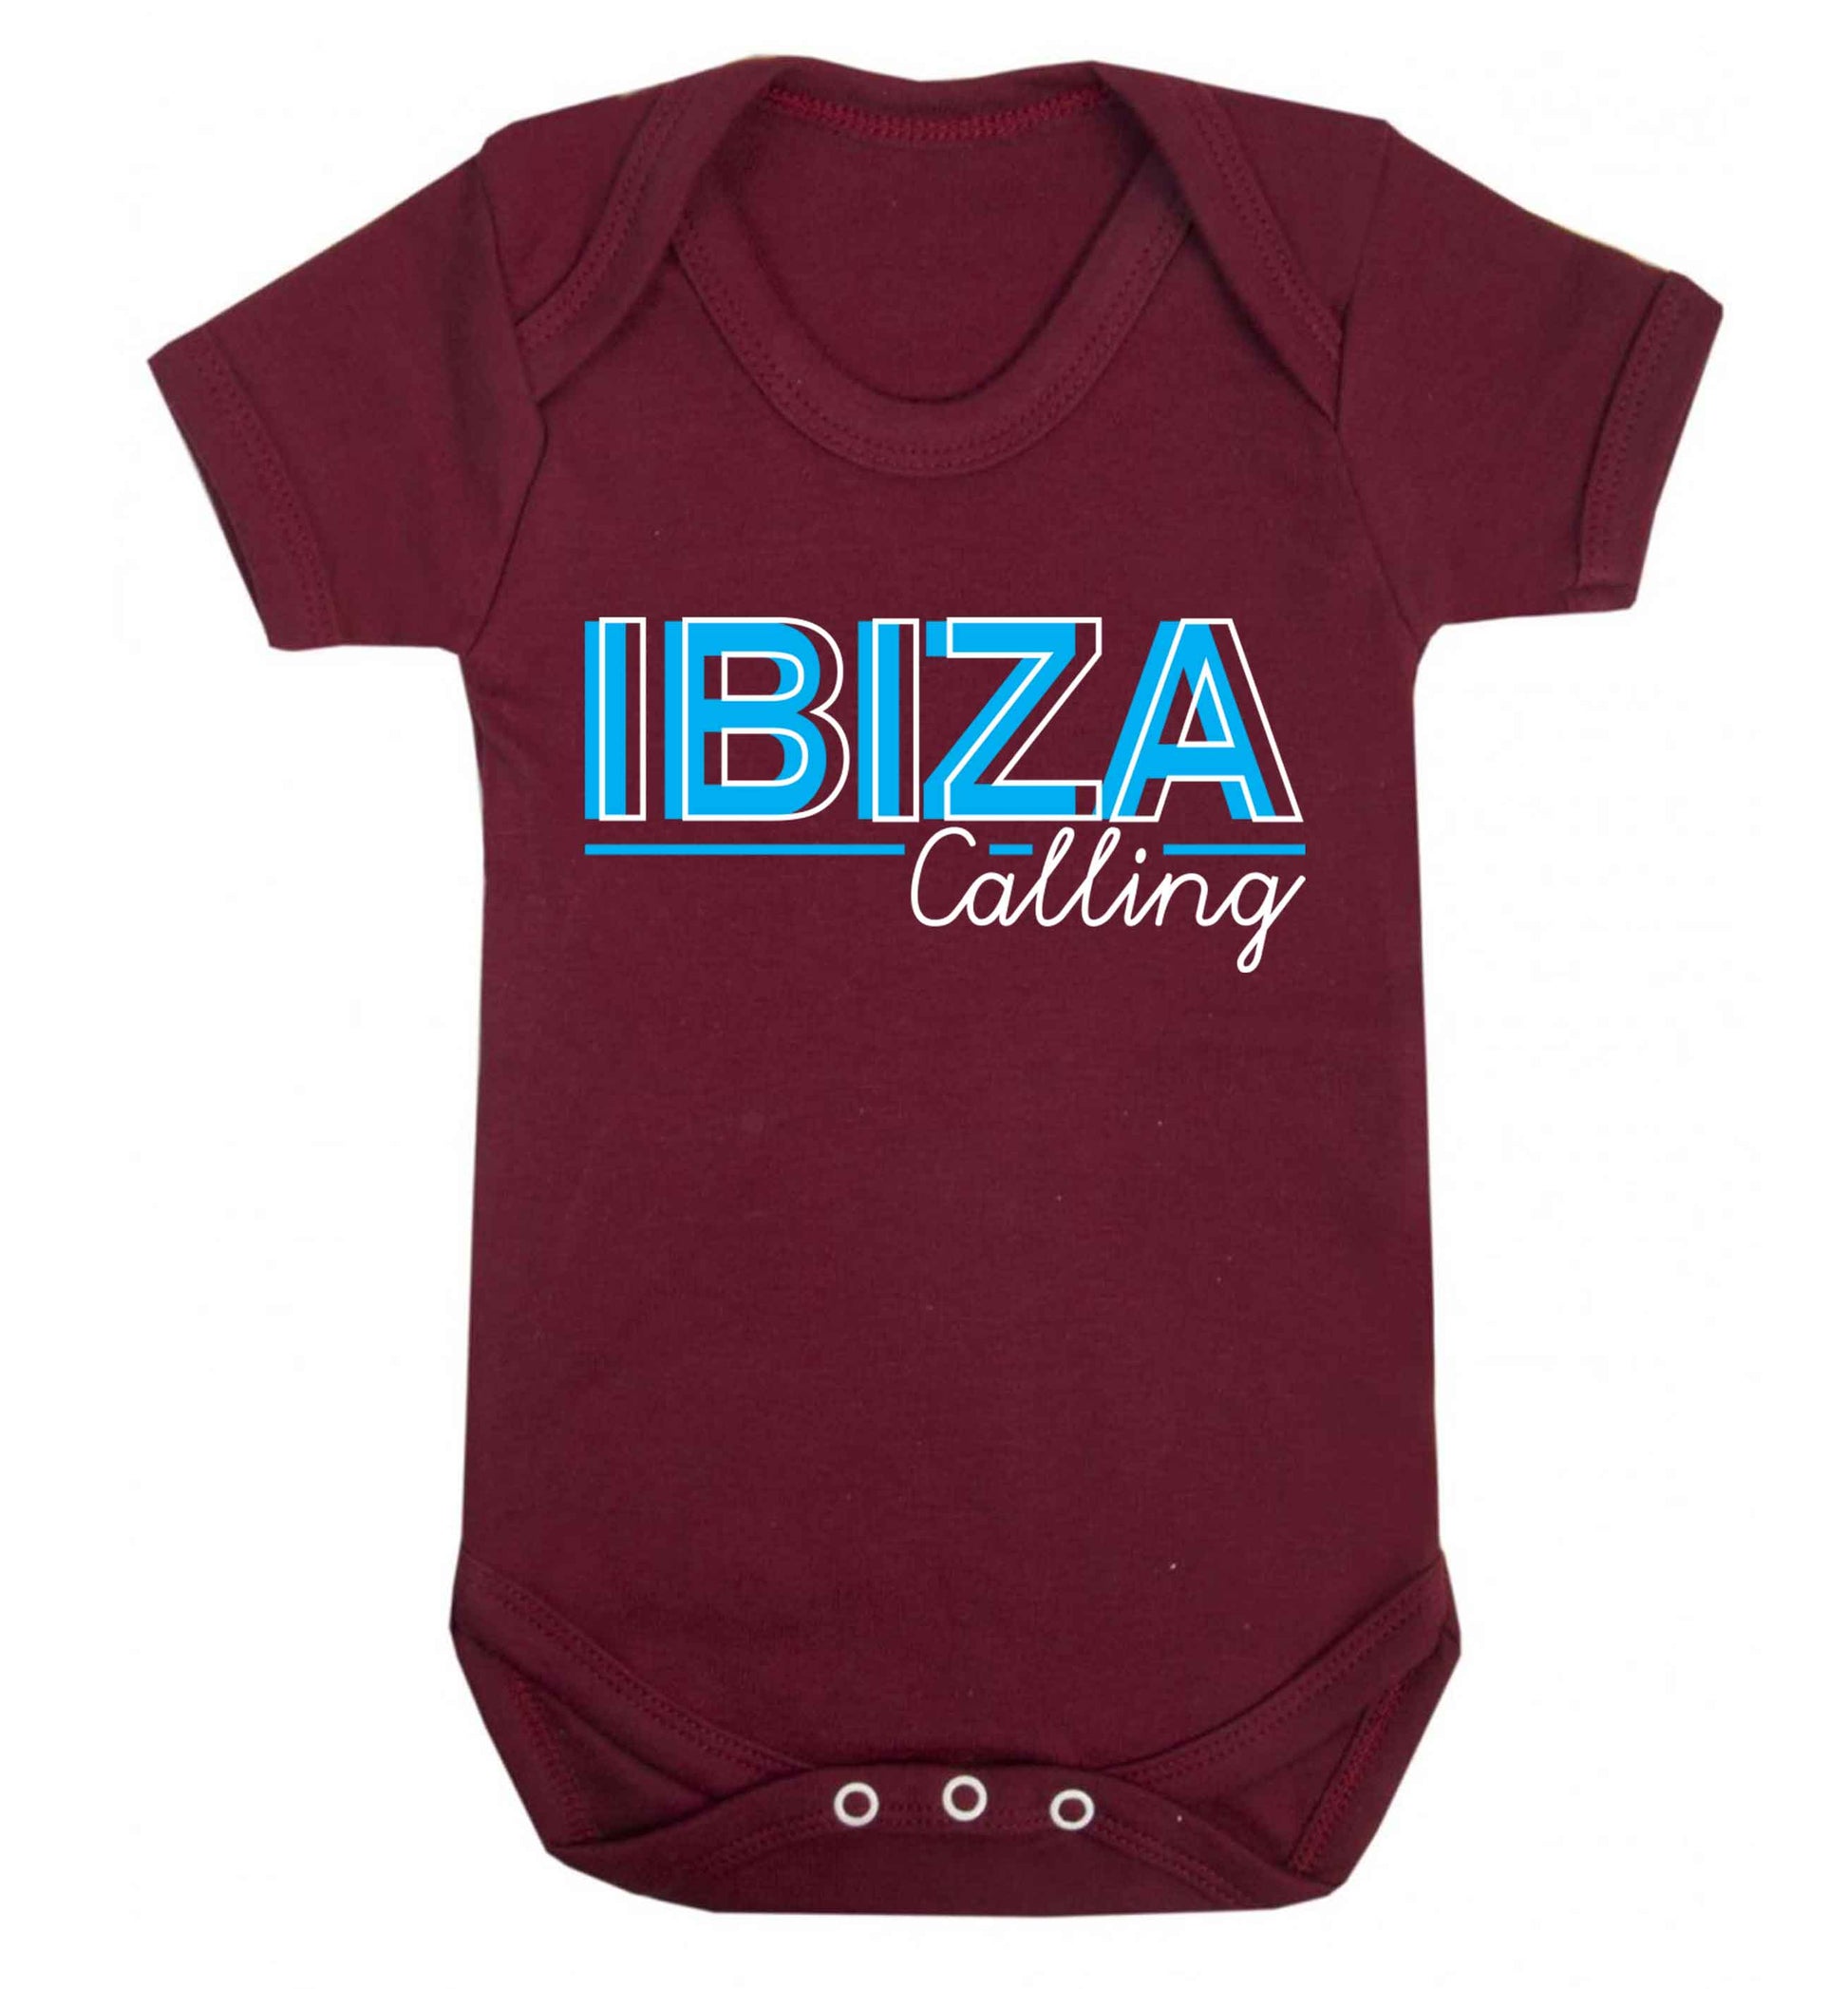 Ibiza calling Baby Vest maroon 18-24 months